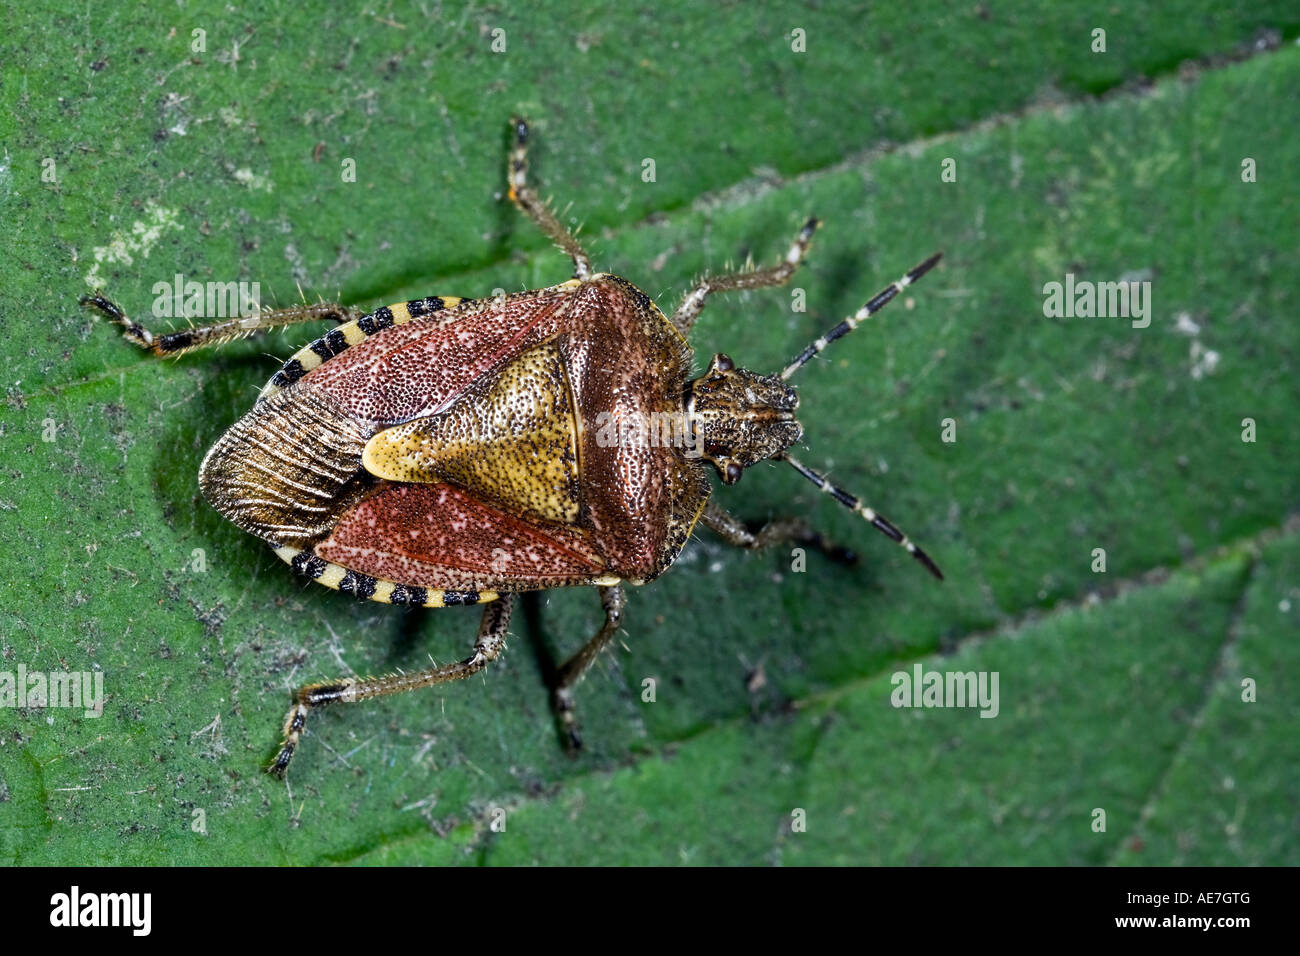 Prunelle Dolycoris baccarum Bug on leaf Banque D'Images